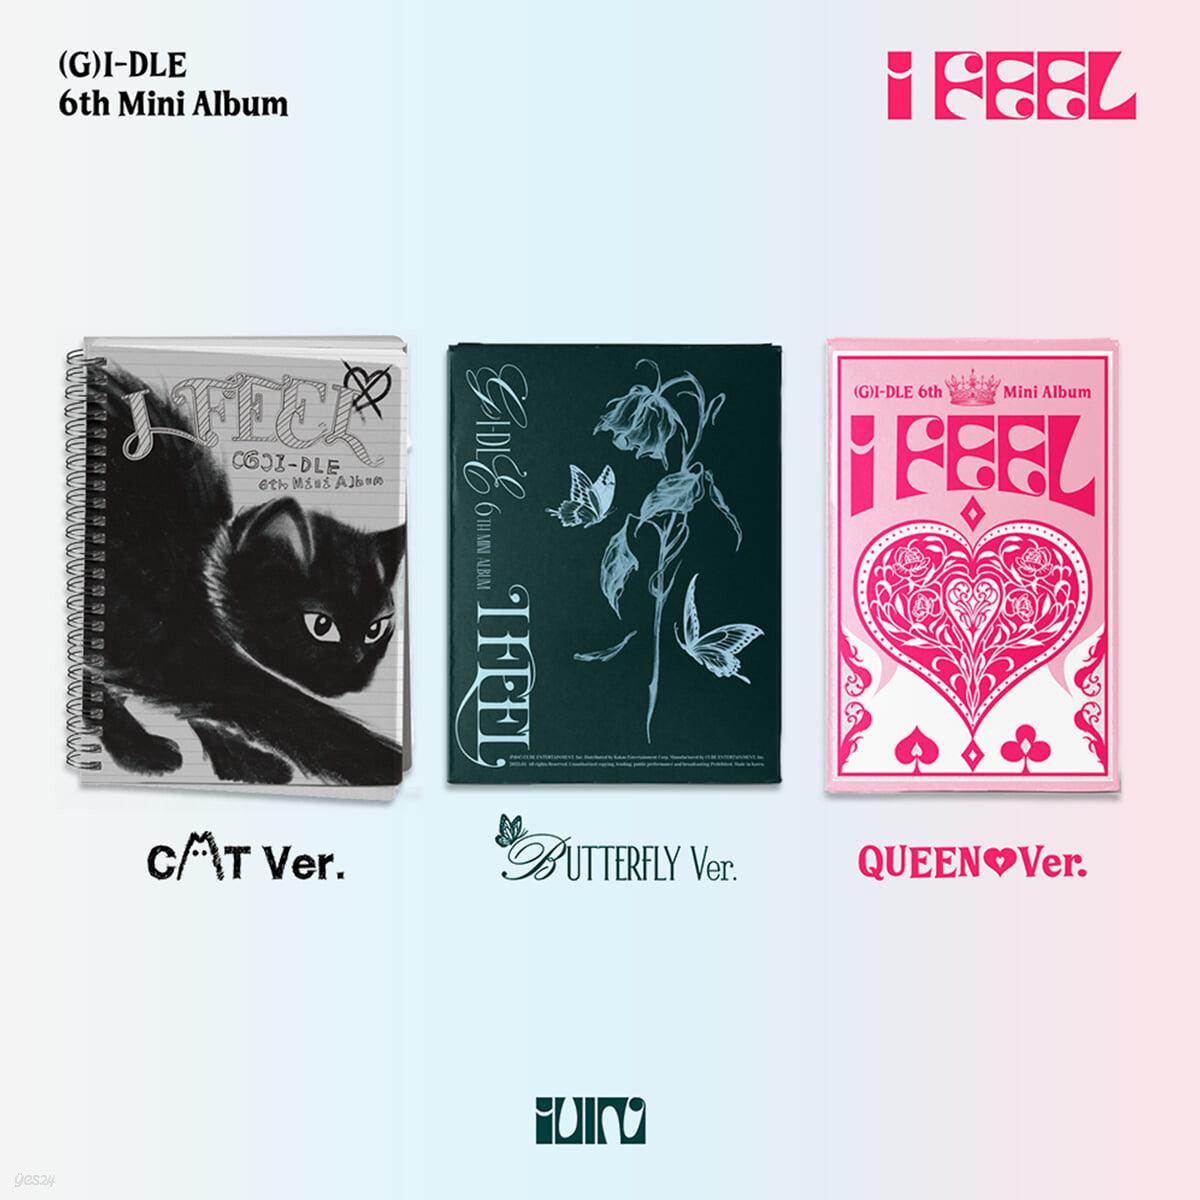 (G)I-DLE Mini Album Vol. 6 - I Feel - KKANG